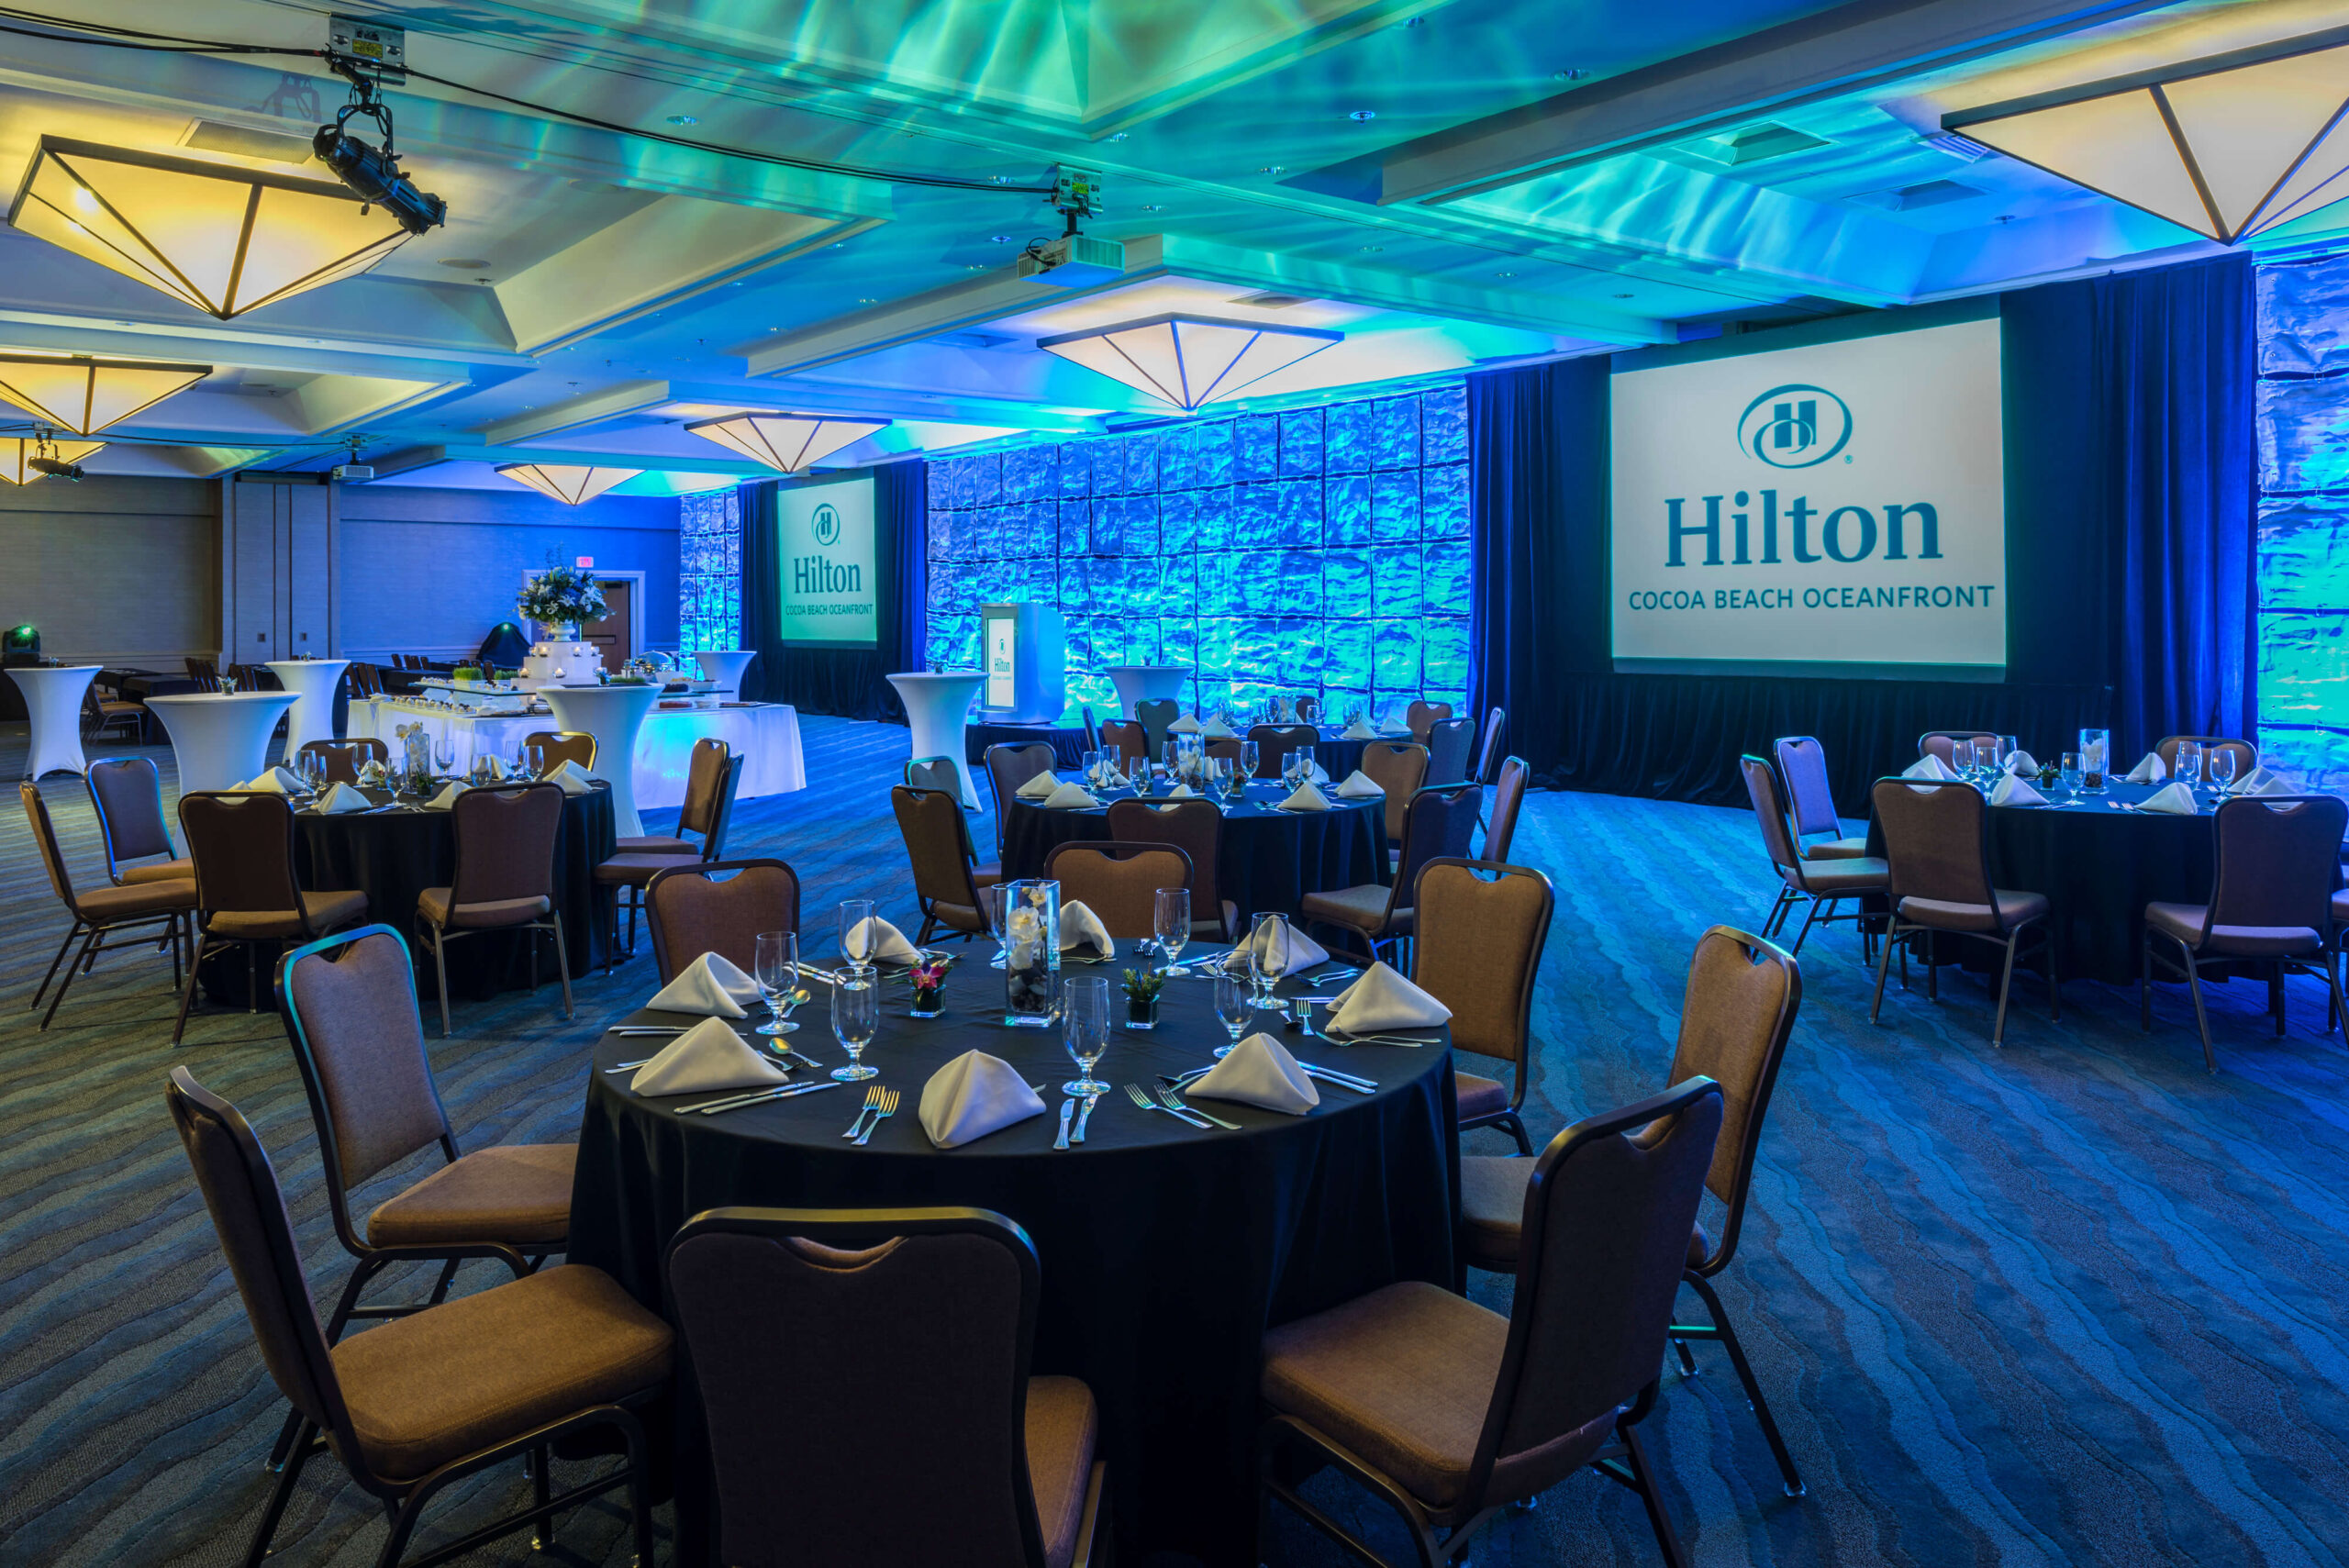 Hilton's grand ballroom set up for a meeting